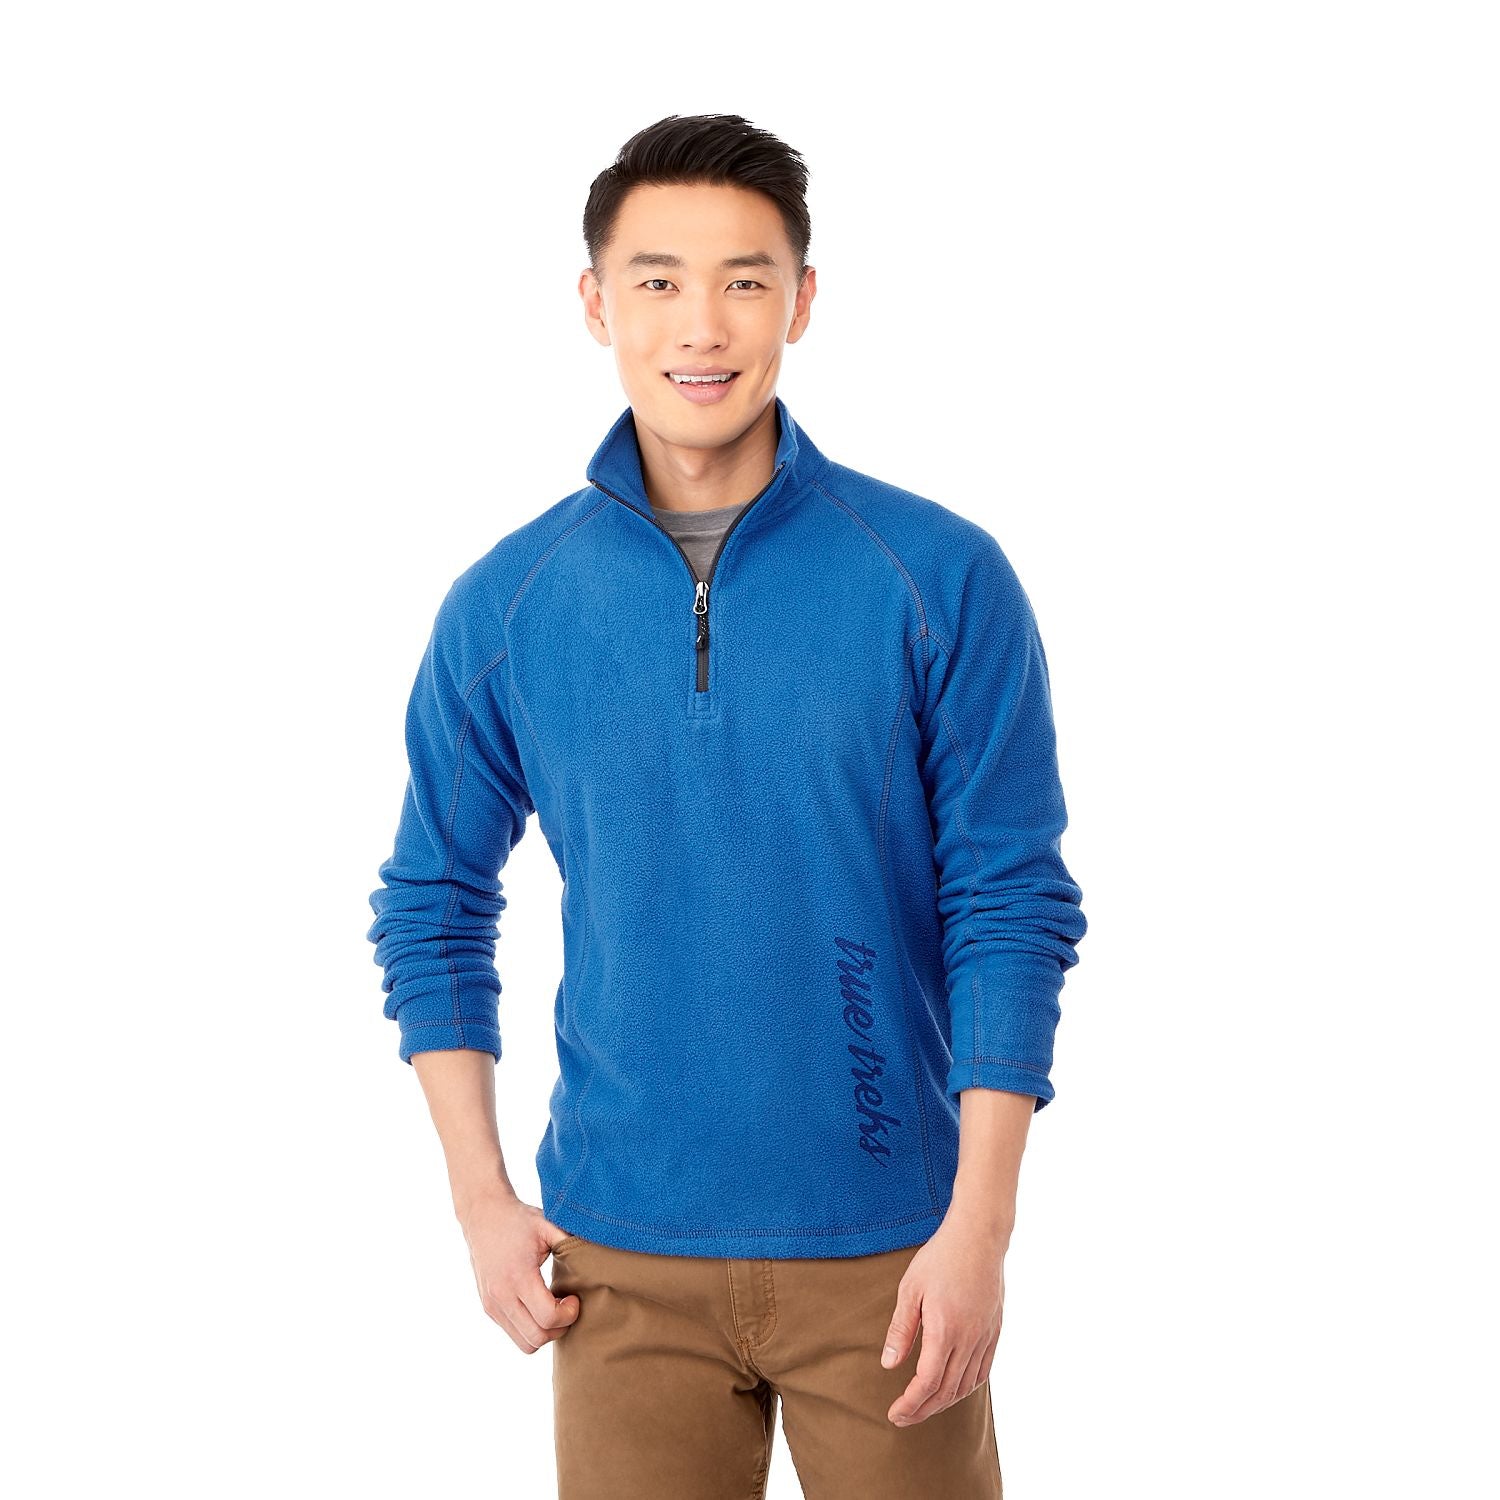 Men's BOWLEN Polyfleece Qtr Zip Sweatshirts PCNA Olympic Blue Embroidered S-XL